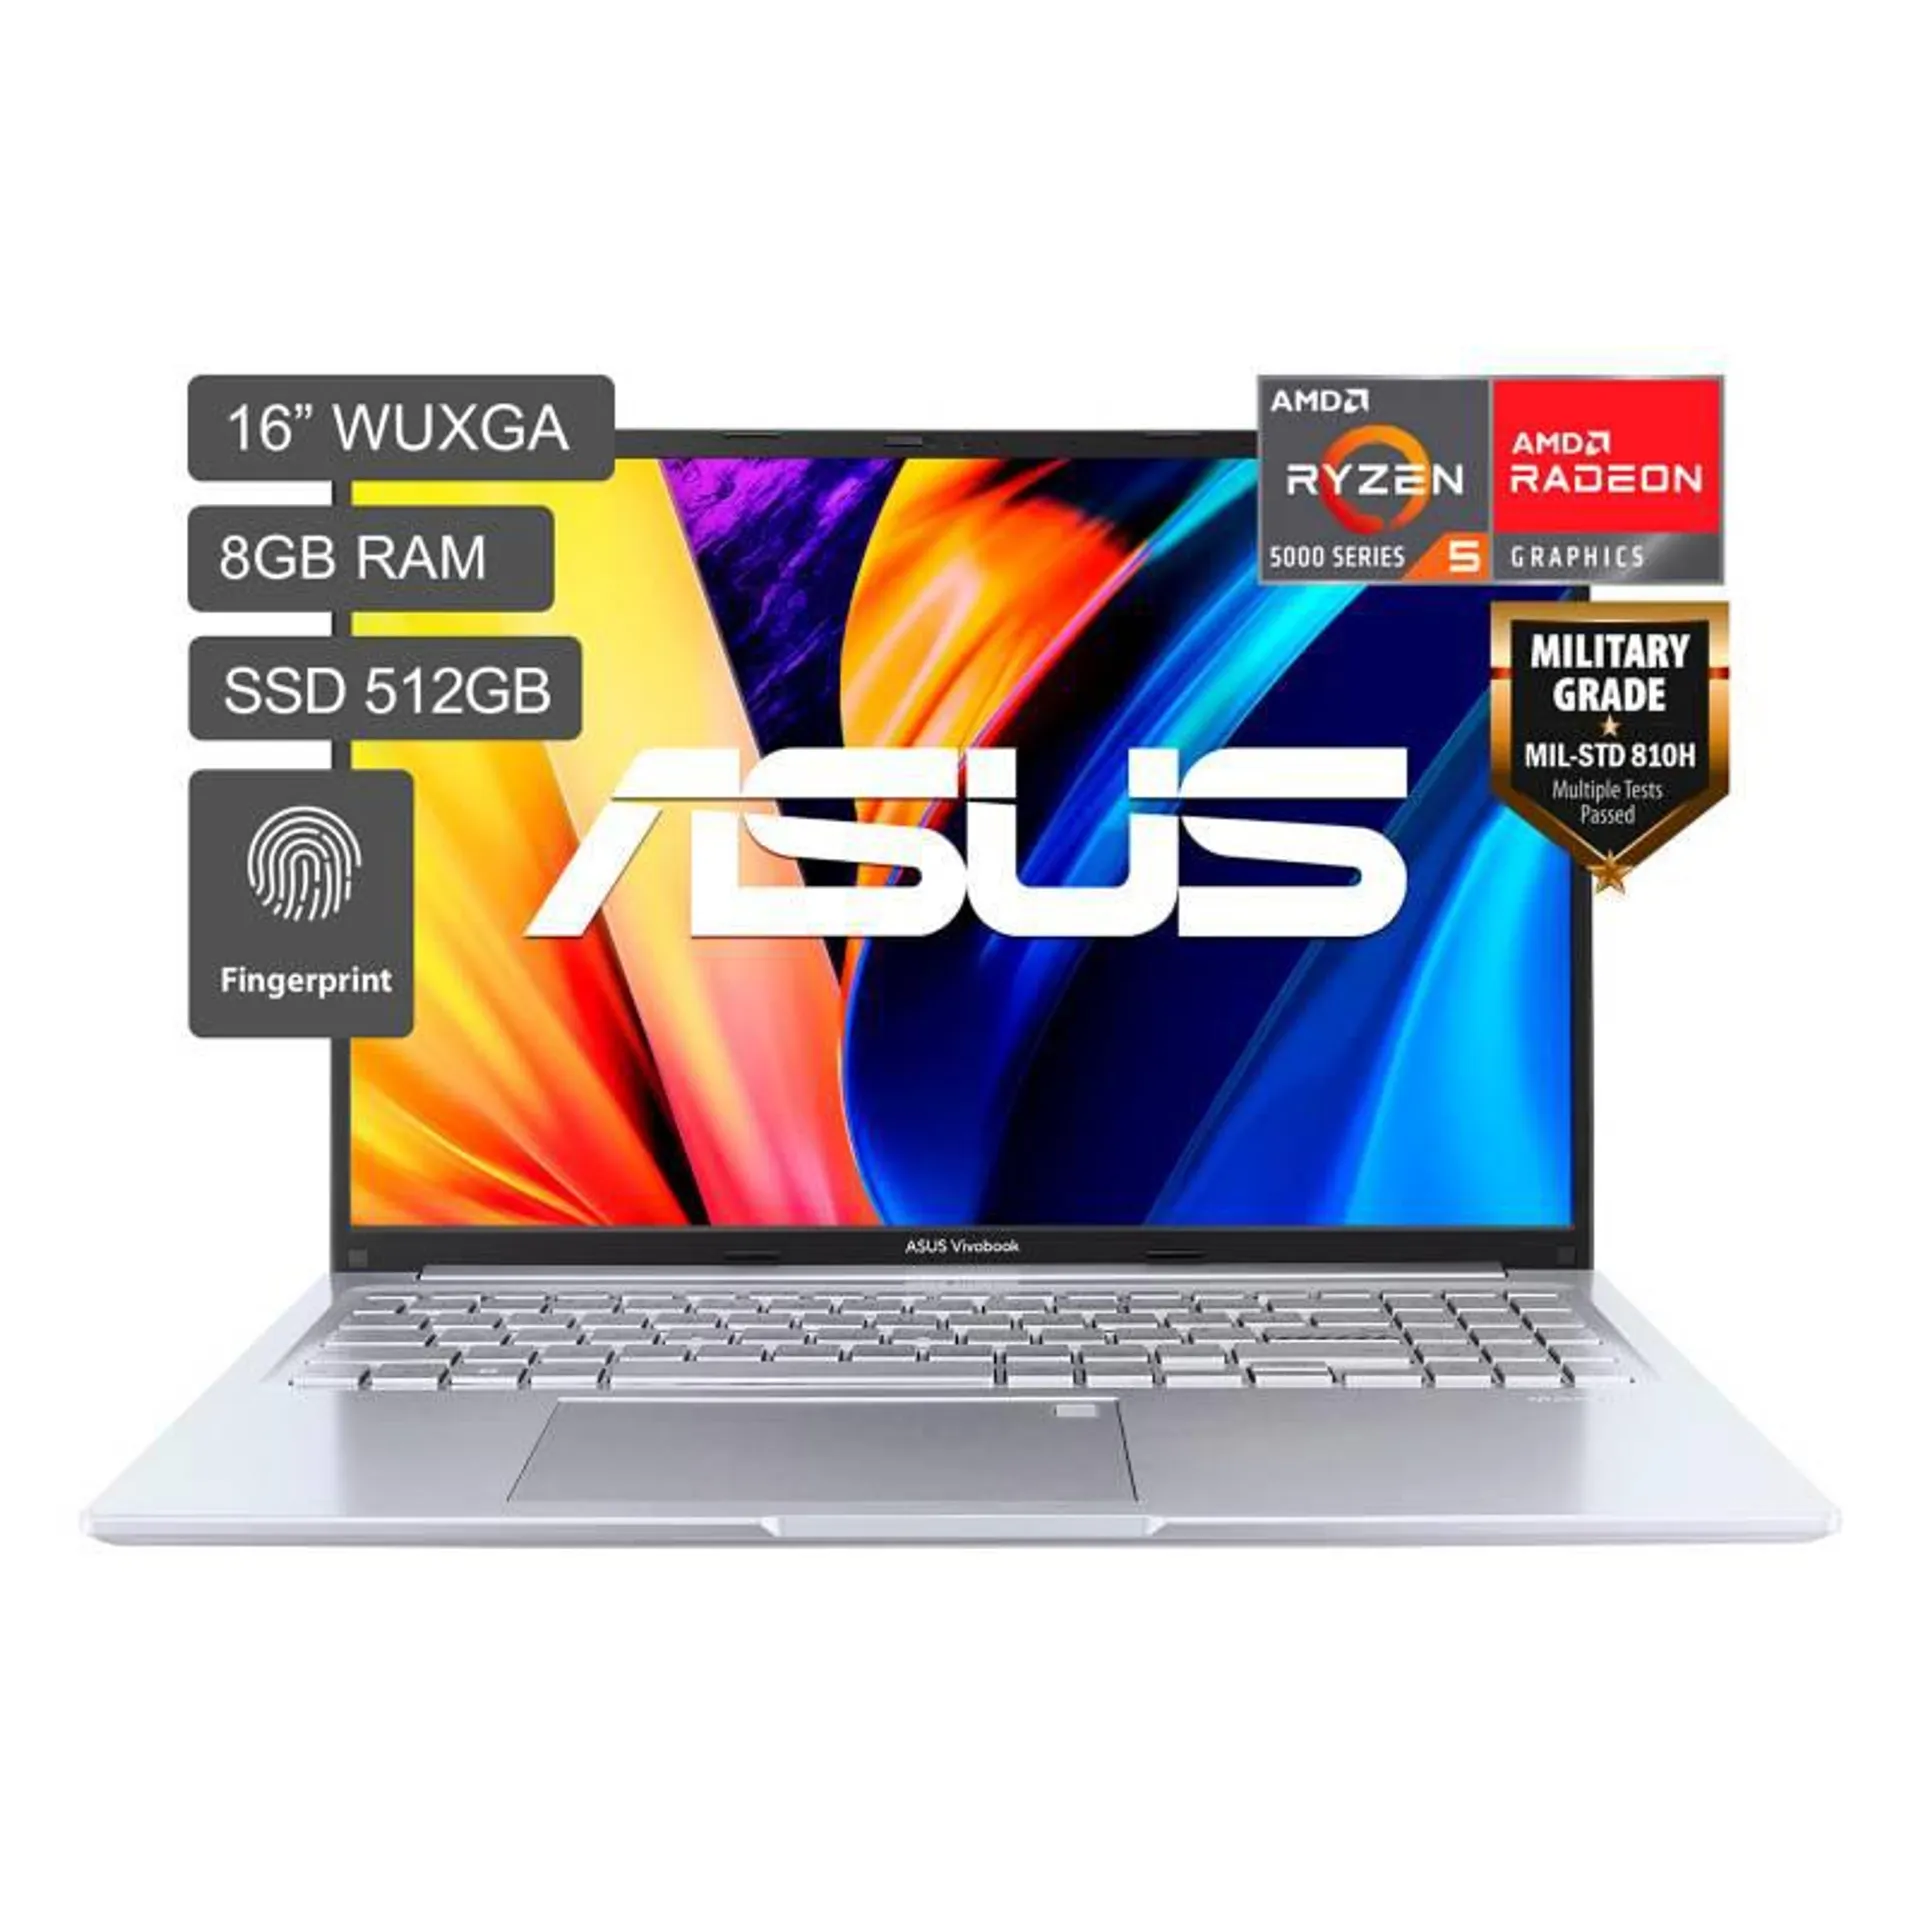 Laptop ASUS Vivobook AMD Ryzen 5 Serie 5000 8GB 512 GB 16.1"